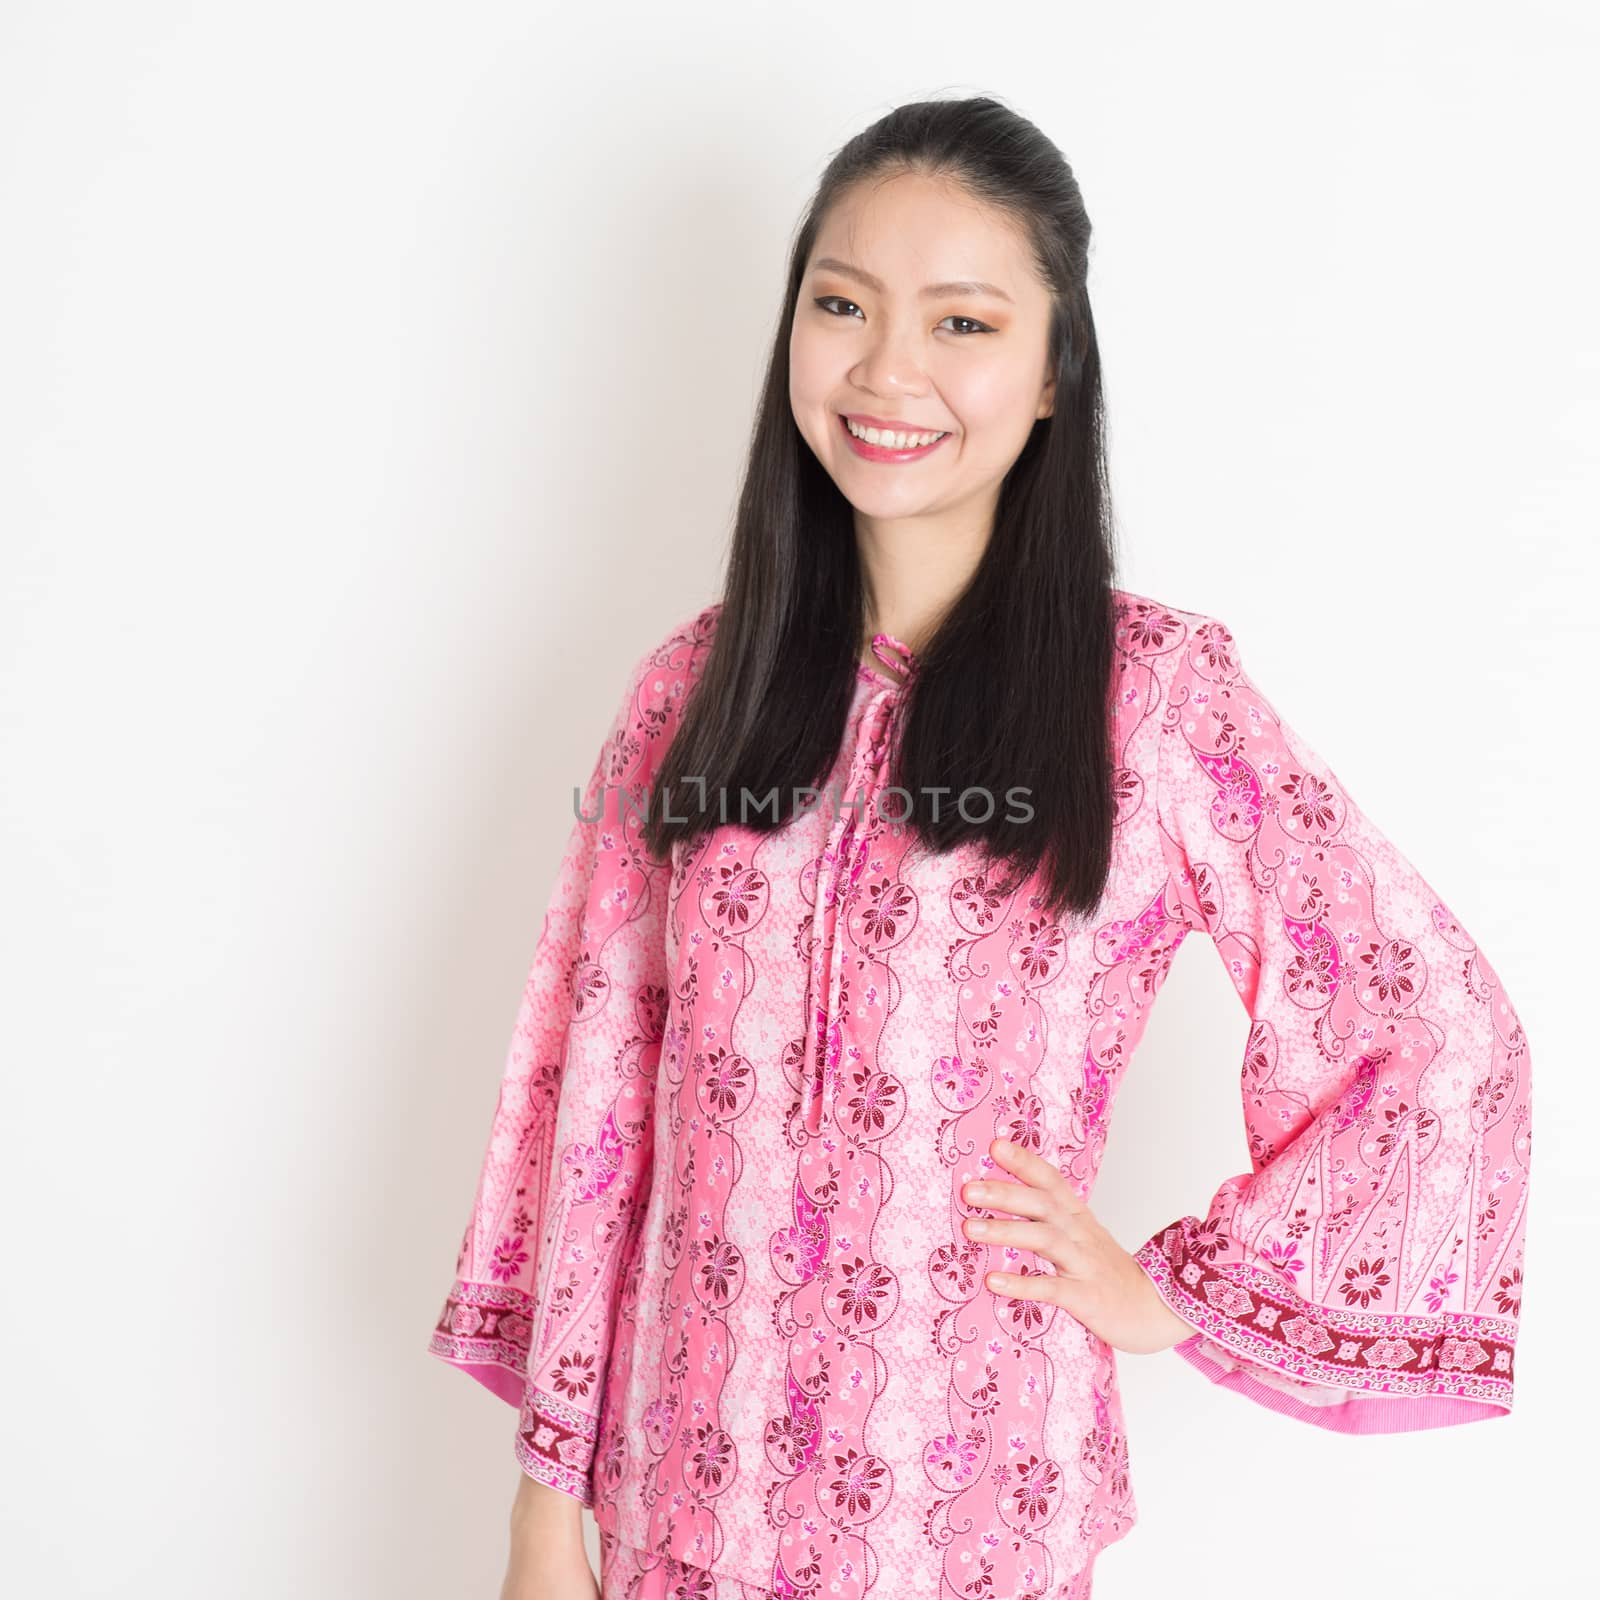 Portrait of happy Southeast Asian woman in pink batik dress standing on plain background.